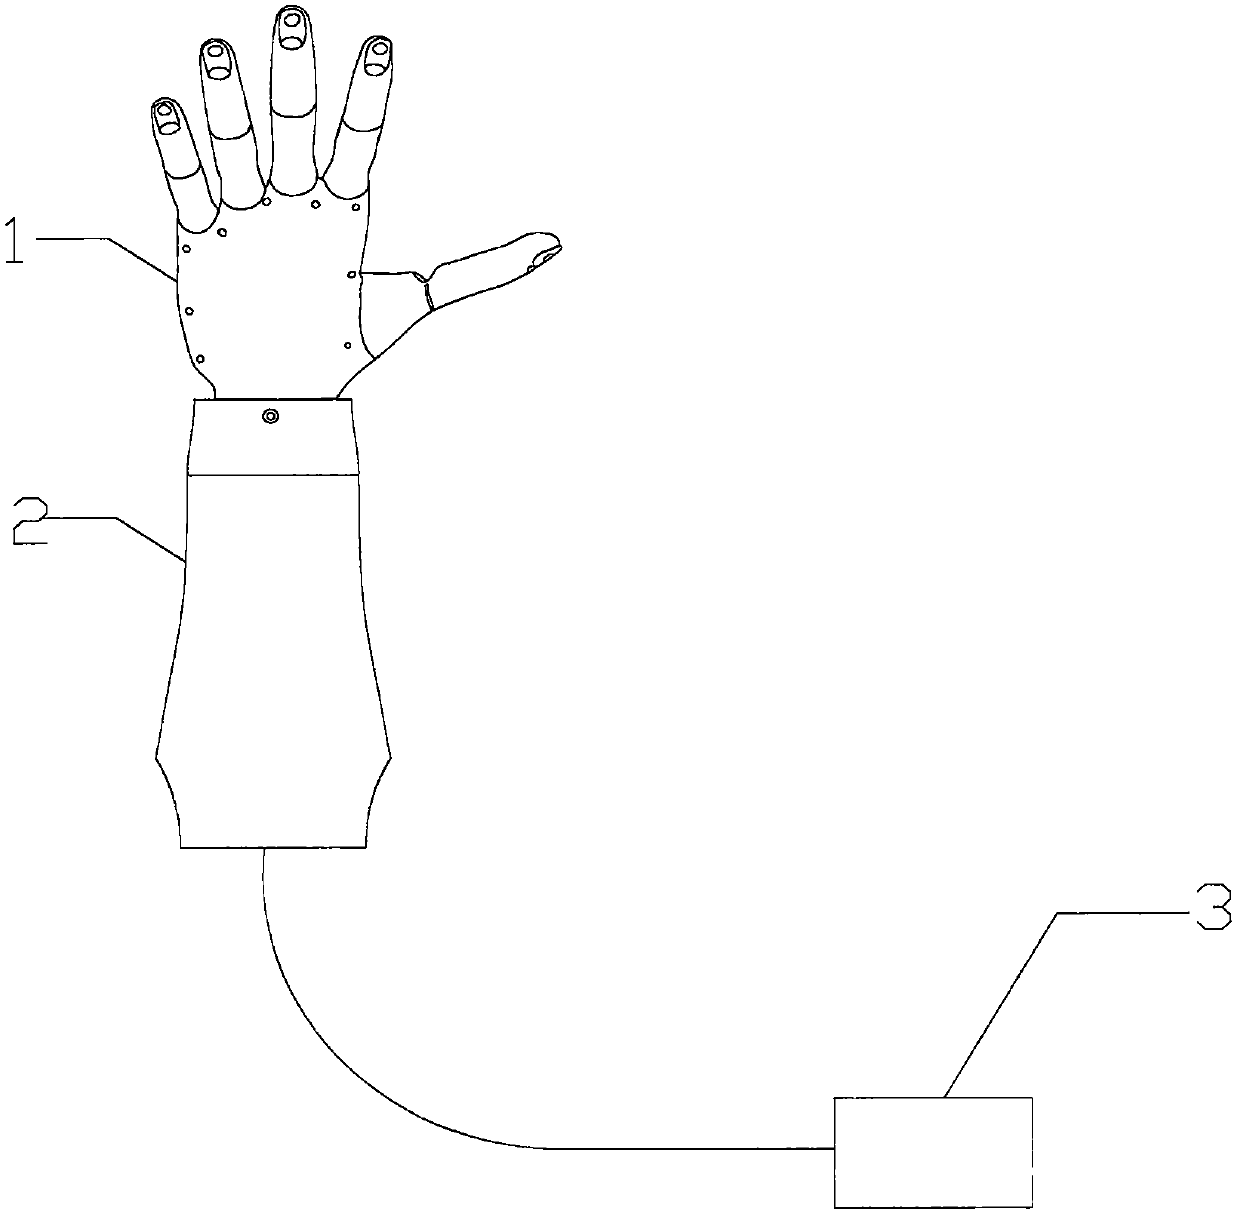 Intelligent myoelectric prosthetic hand device